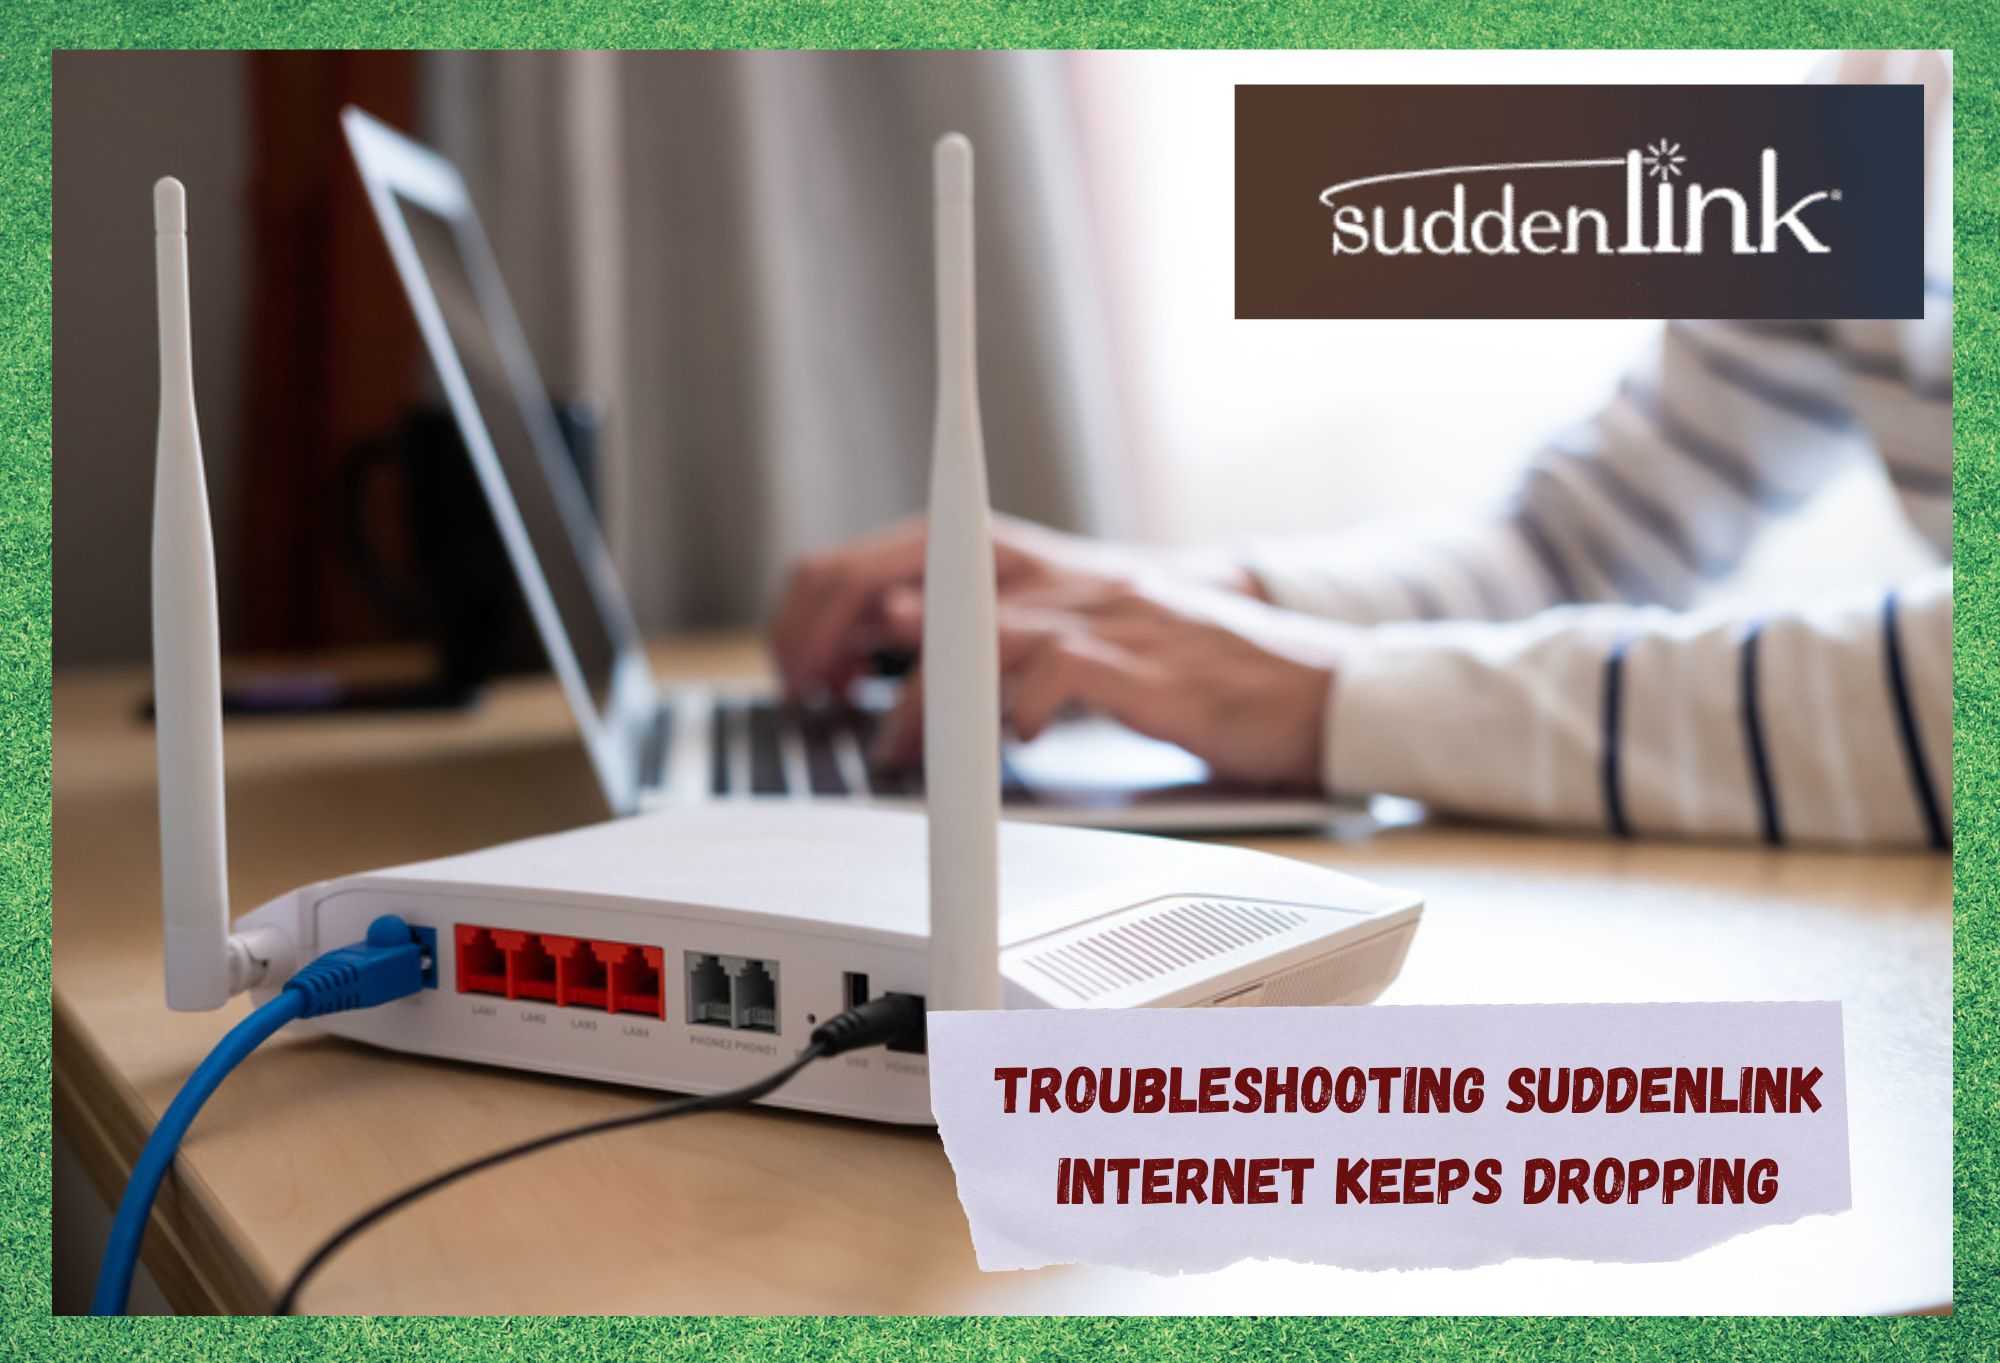 suddenlink internet keeps dropping